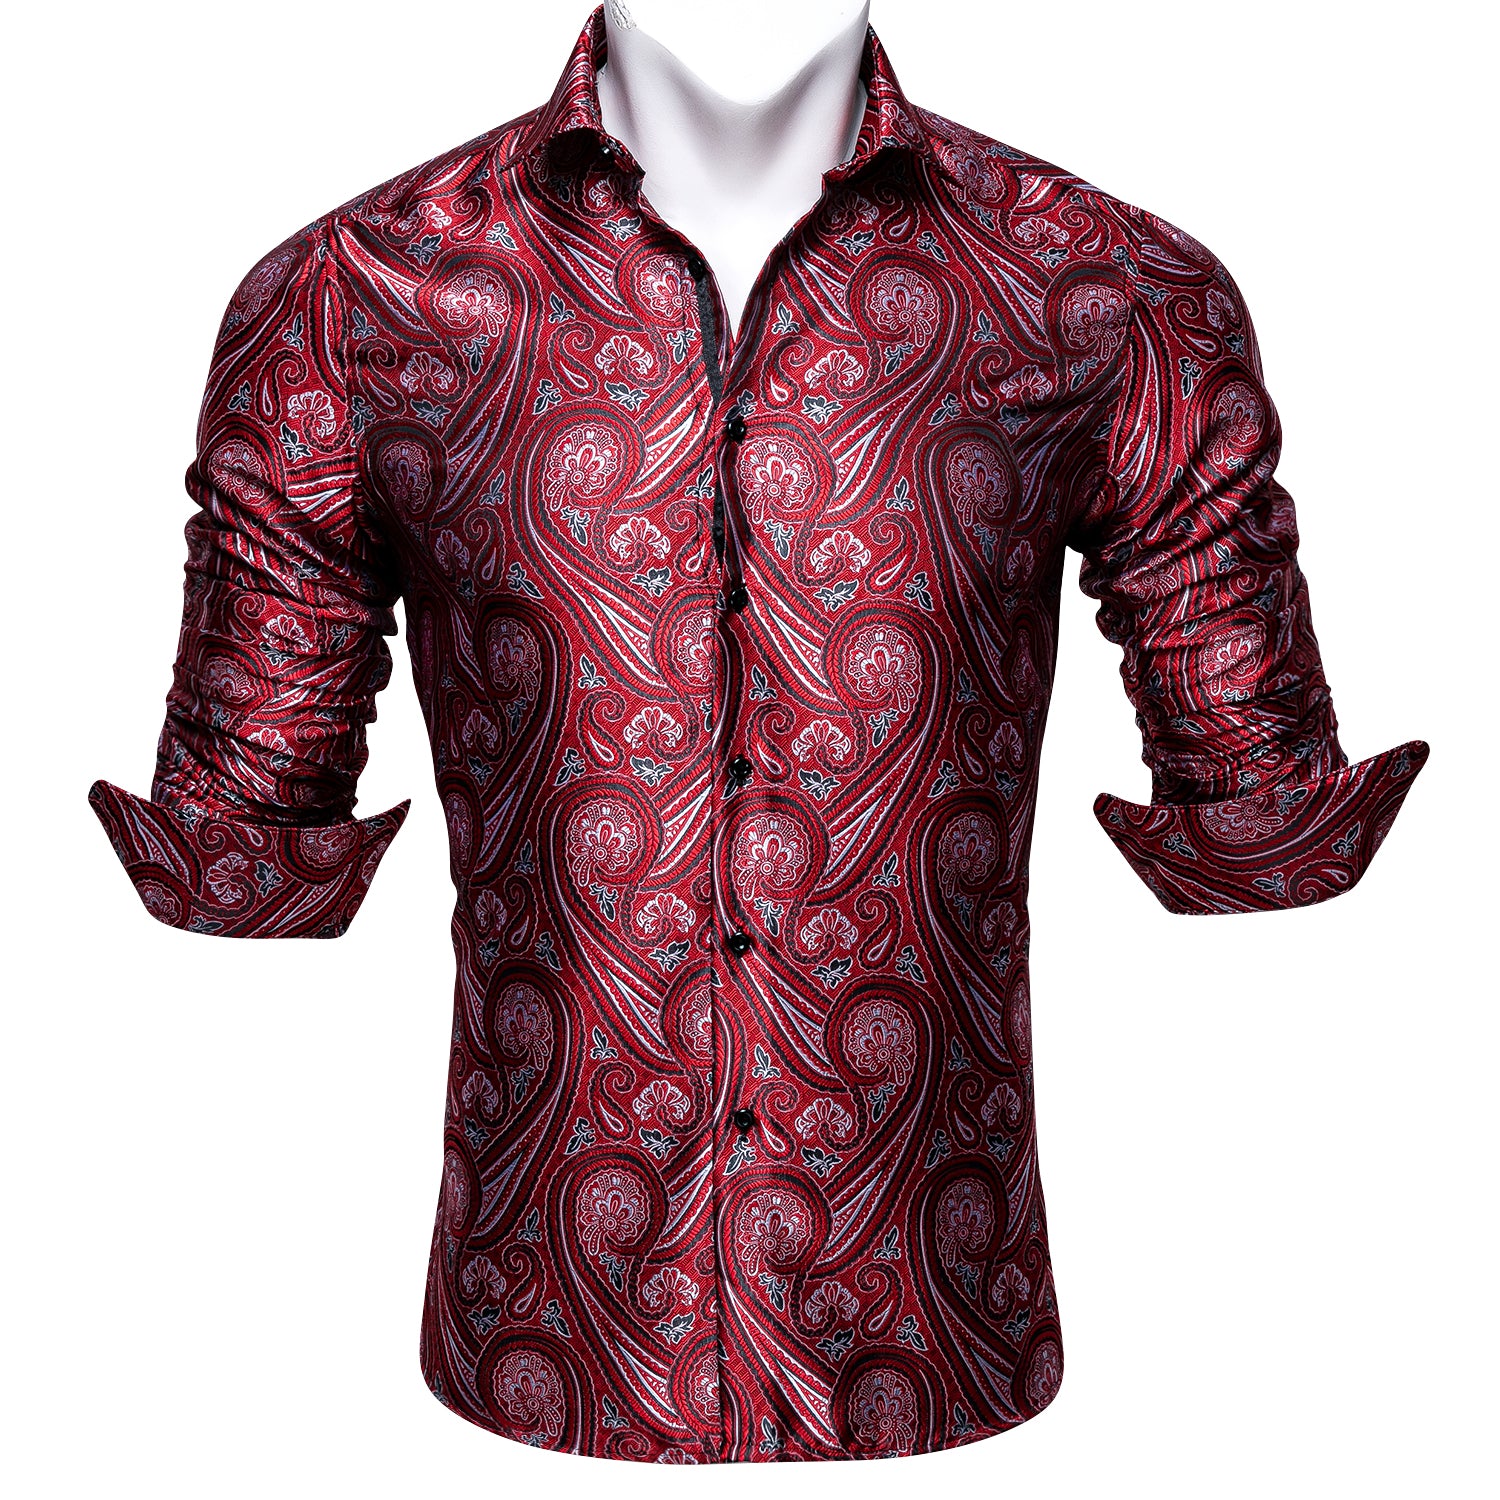 Barry.wang New Fashionable Red Paisley Silk Long Sleeve Men's Shirt